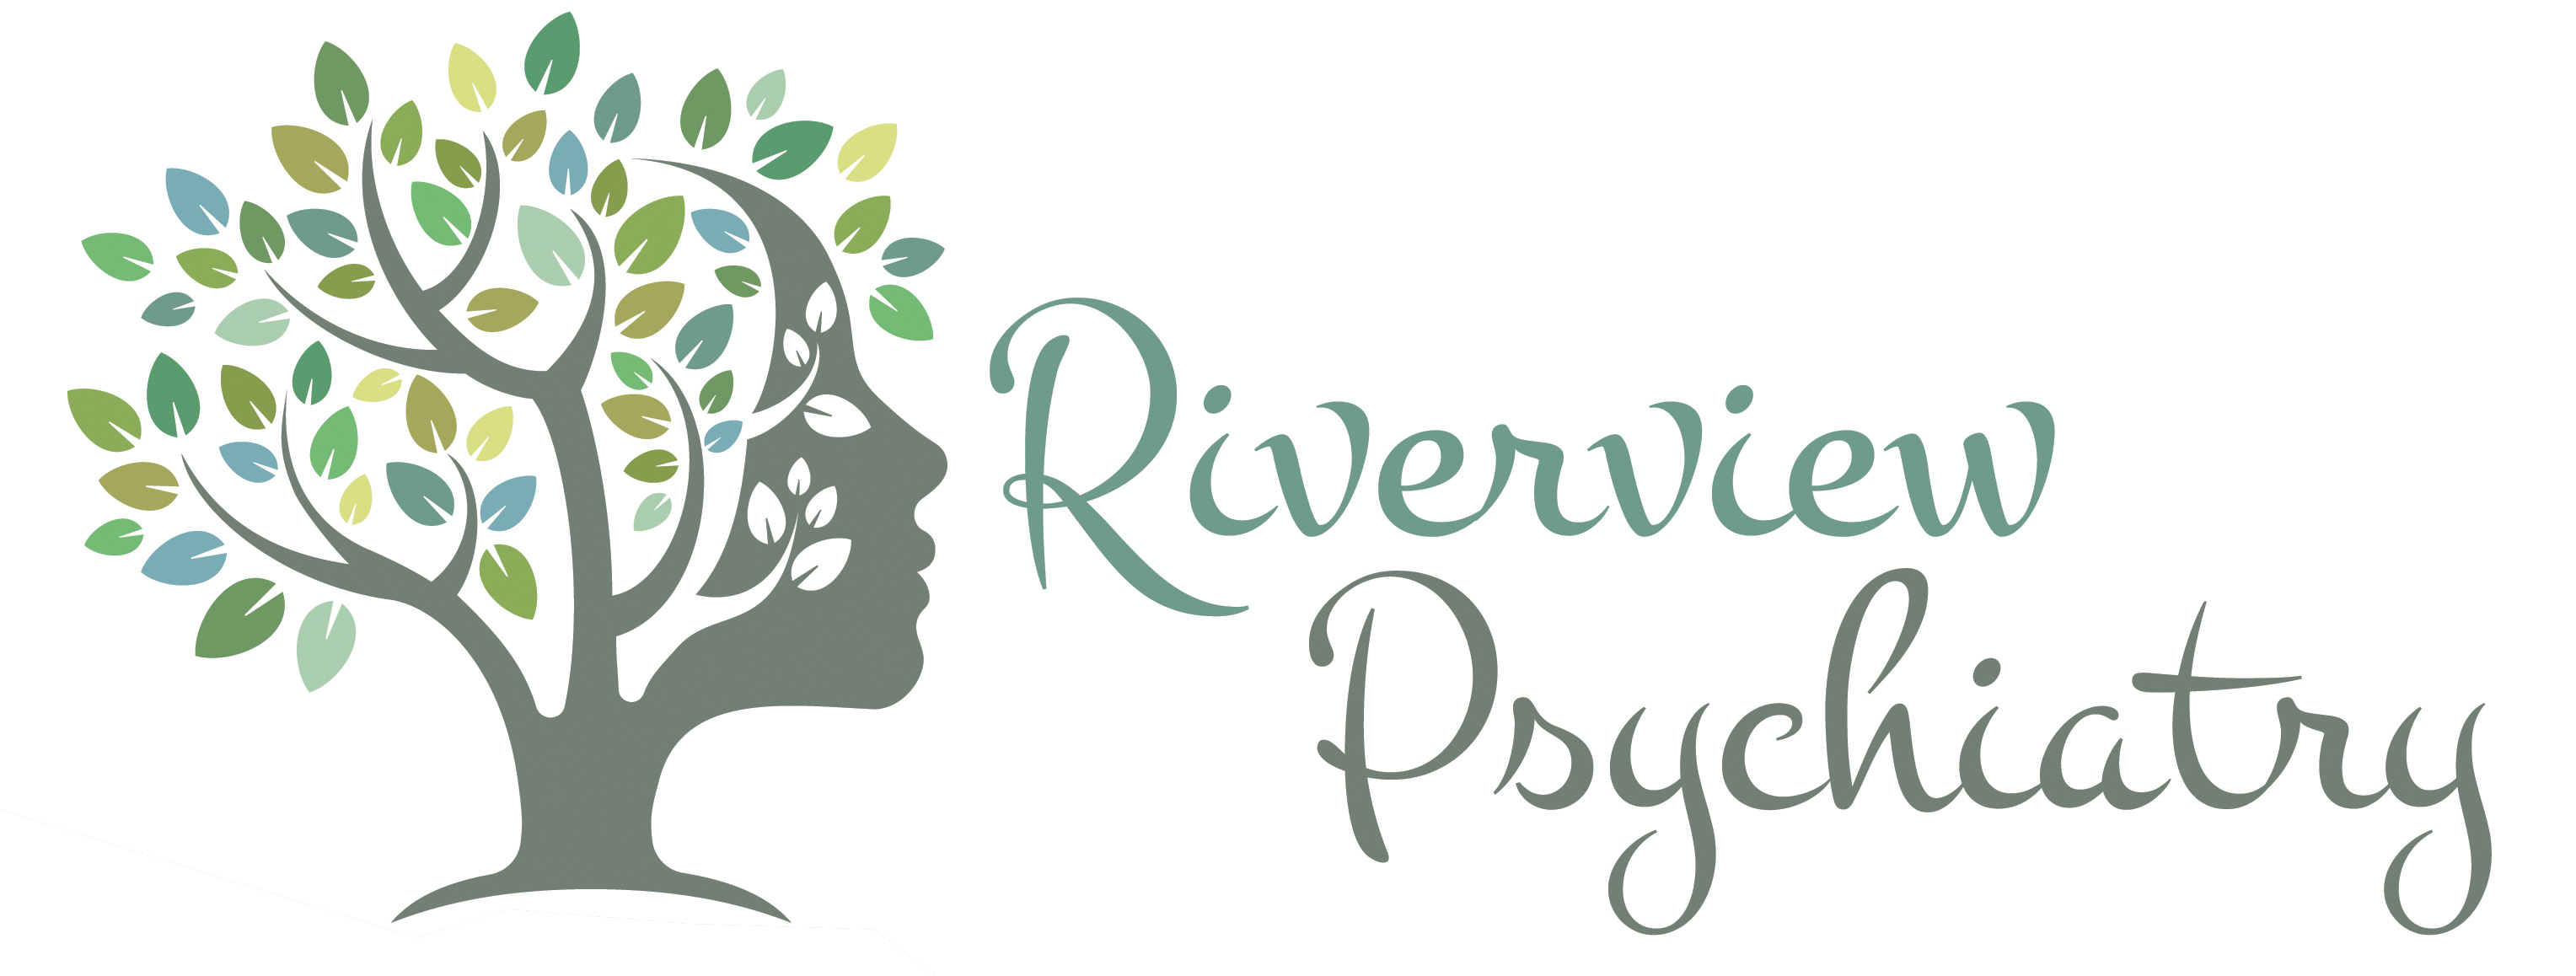 Riverview Psychiatry